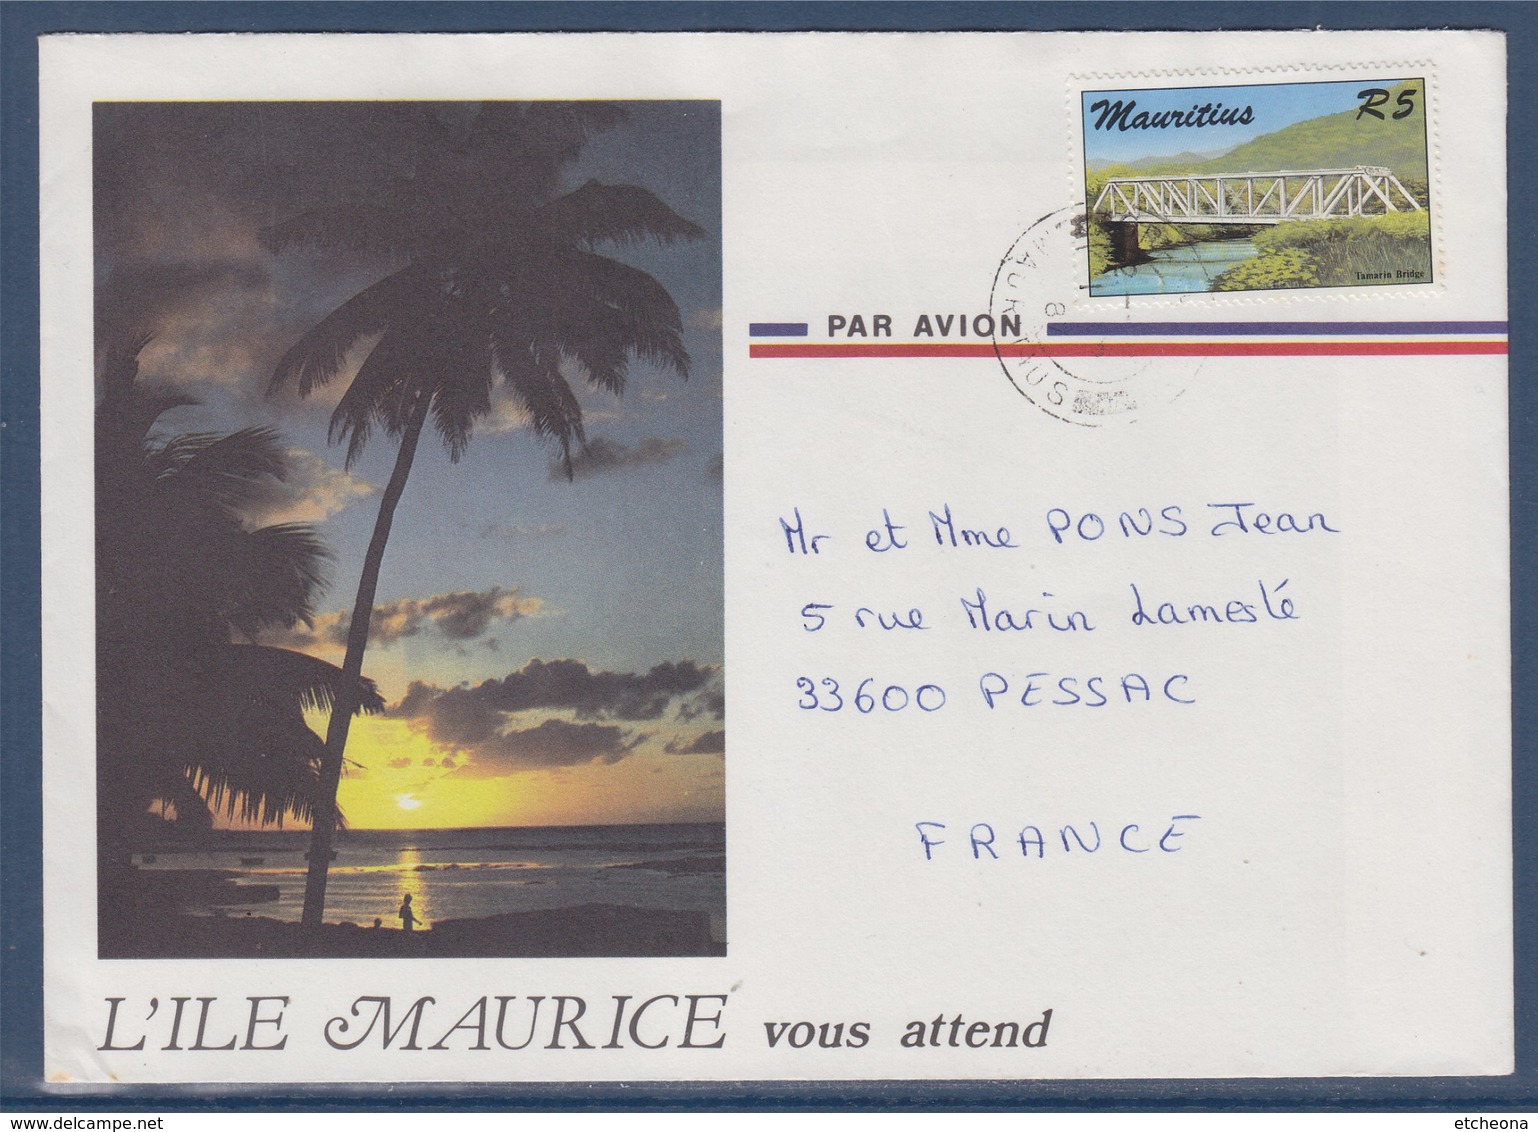 = Enveloppe Illustrée Île Maurice 1 Timbre Pont Tamarin (Tamarin Bridge) à Destination France 87 - Maurice (1968-...)